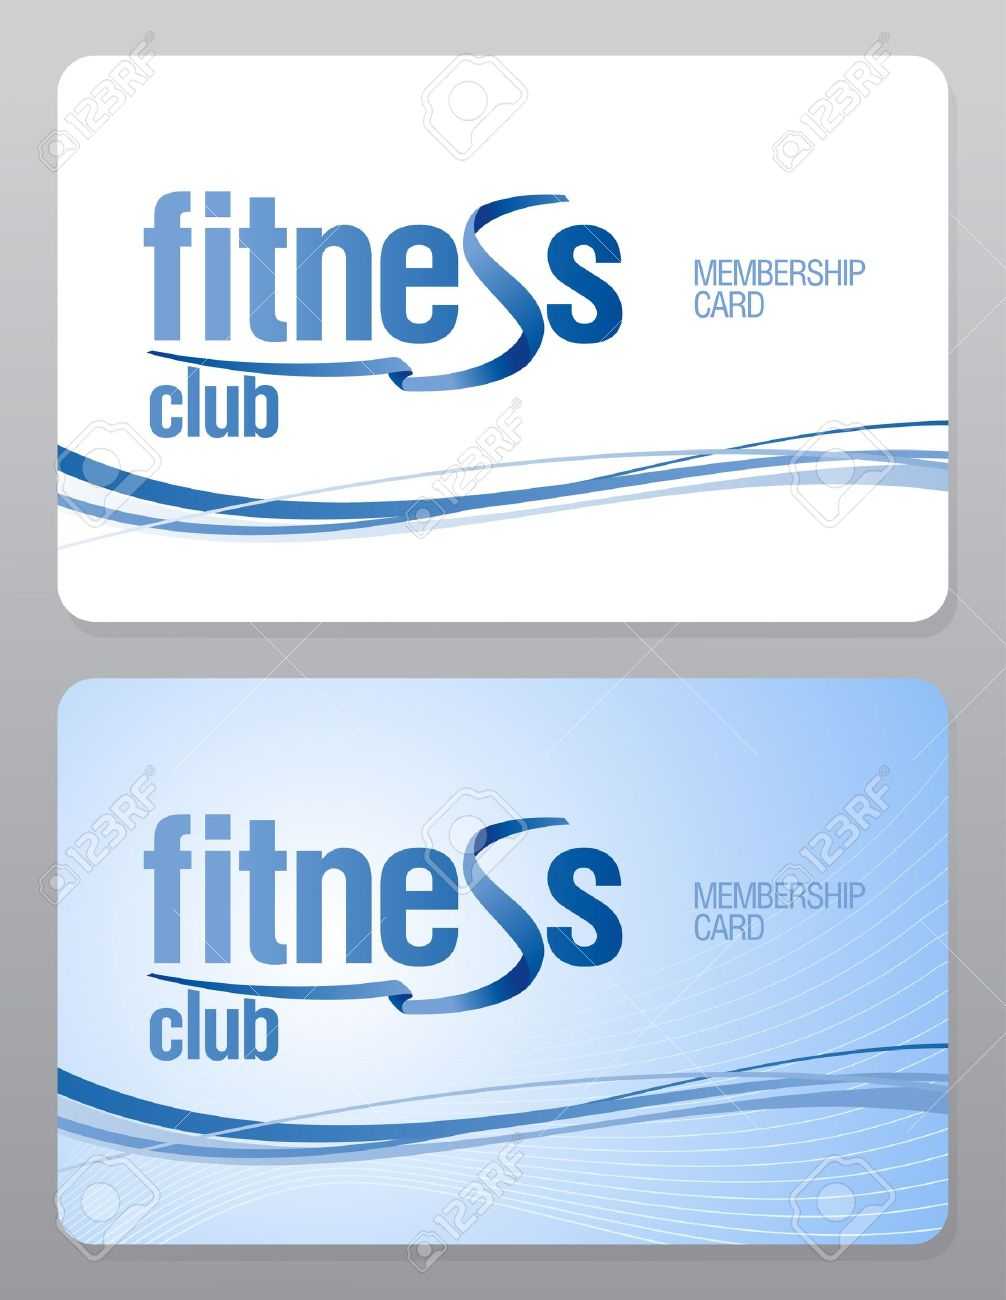 Fitness Club Membership Card Design Template. Intended For Template For Membership Cards